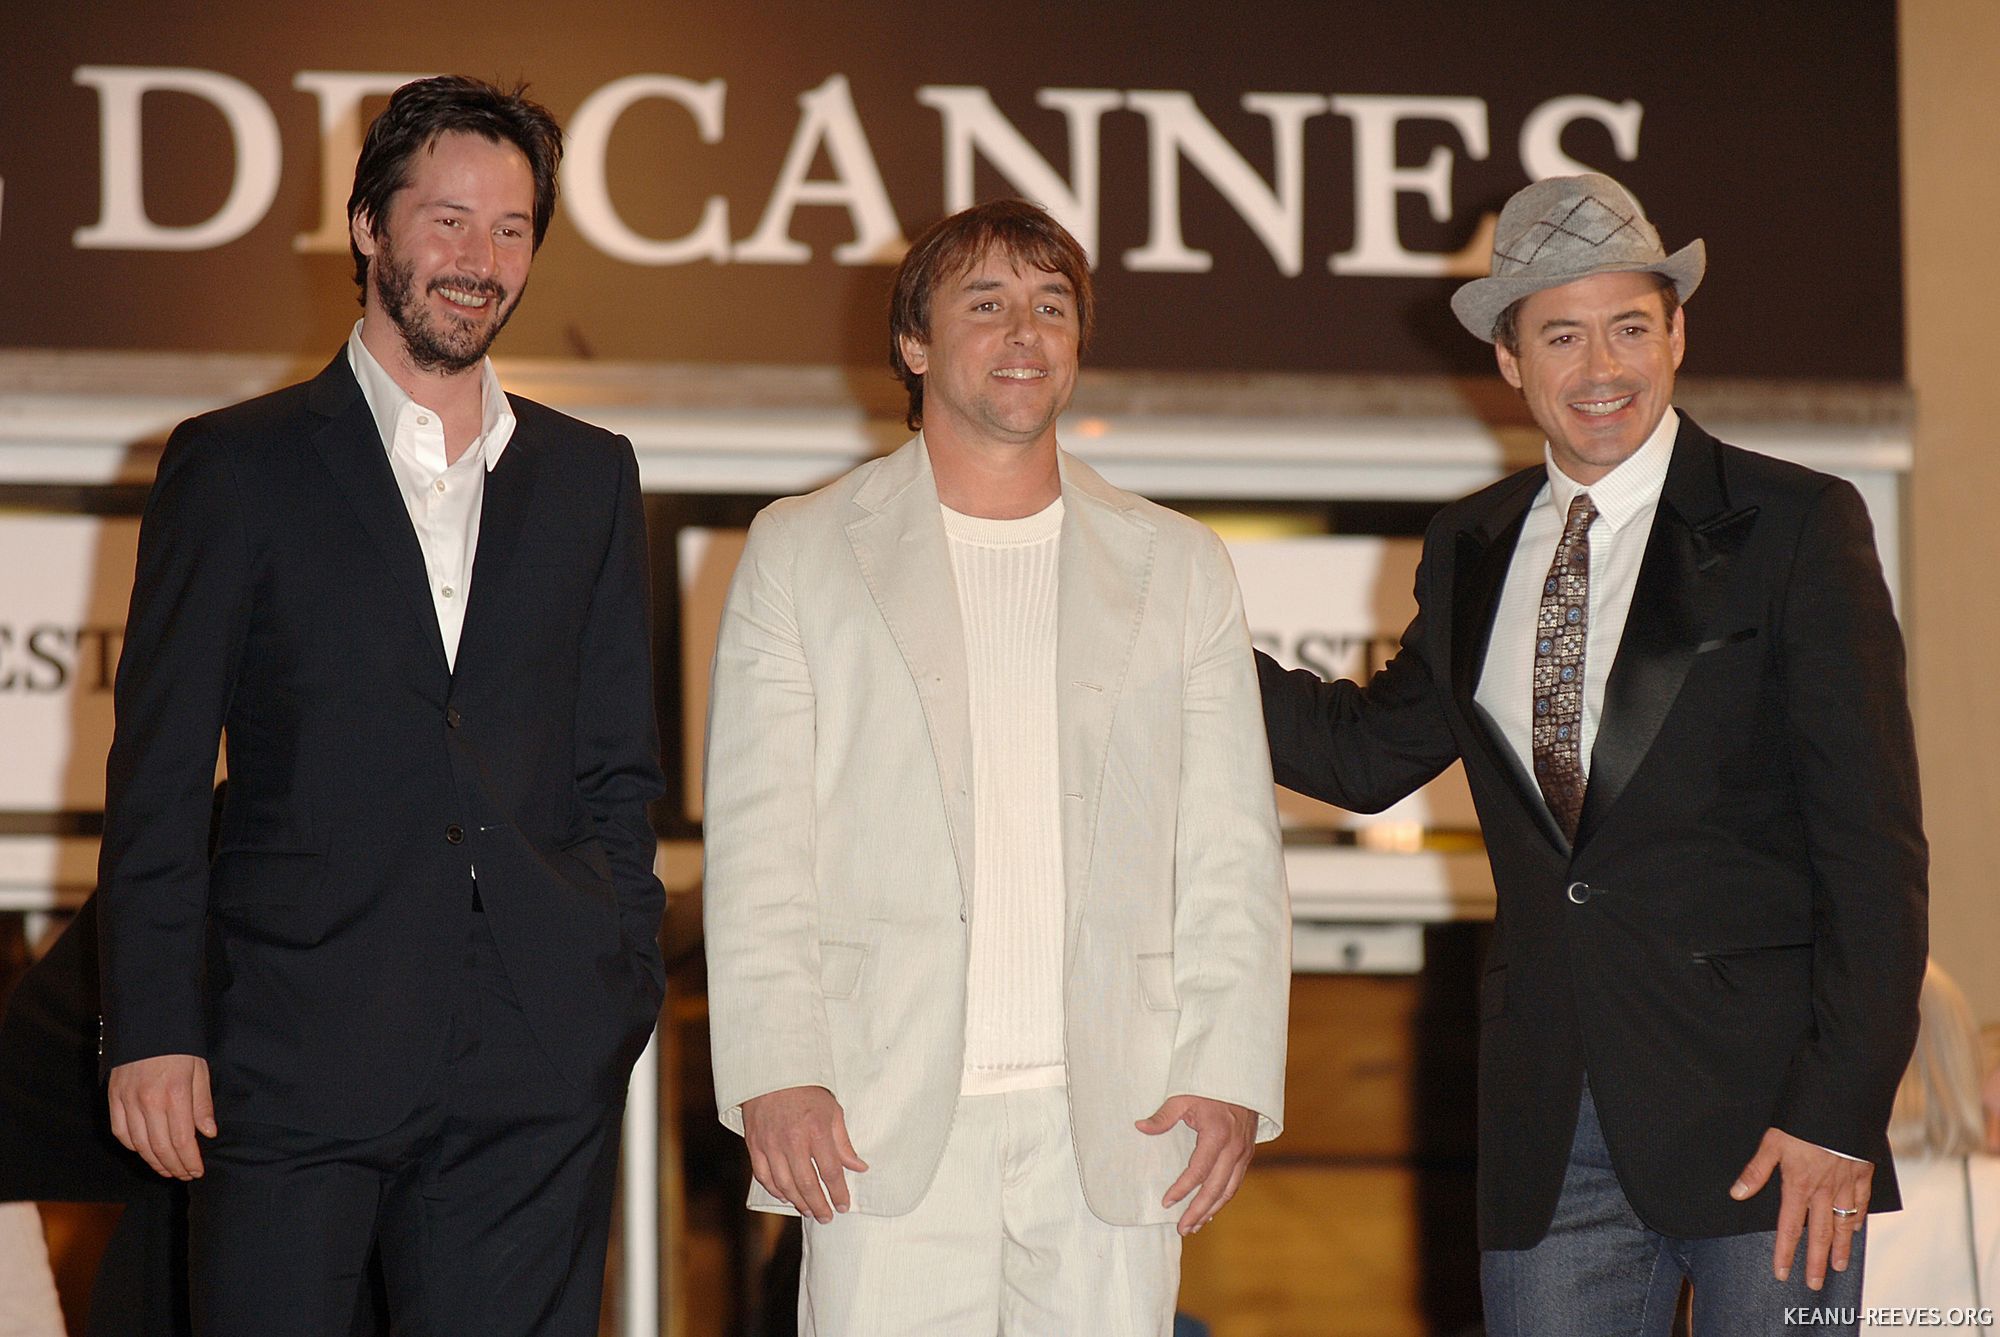 2006-05-25-Cannes-Film-Festival-A-Scanner-Darkly-Premiere-011.jpg